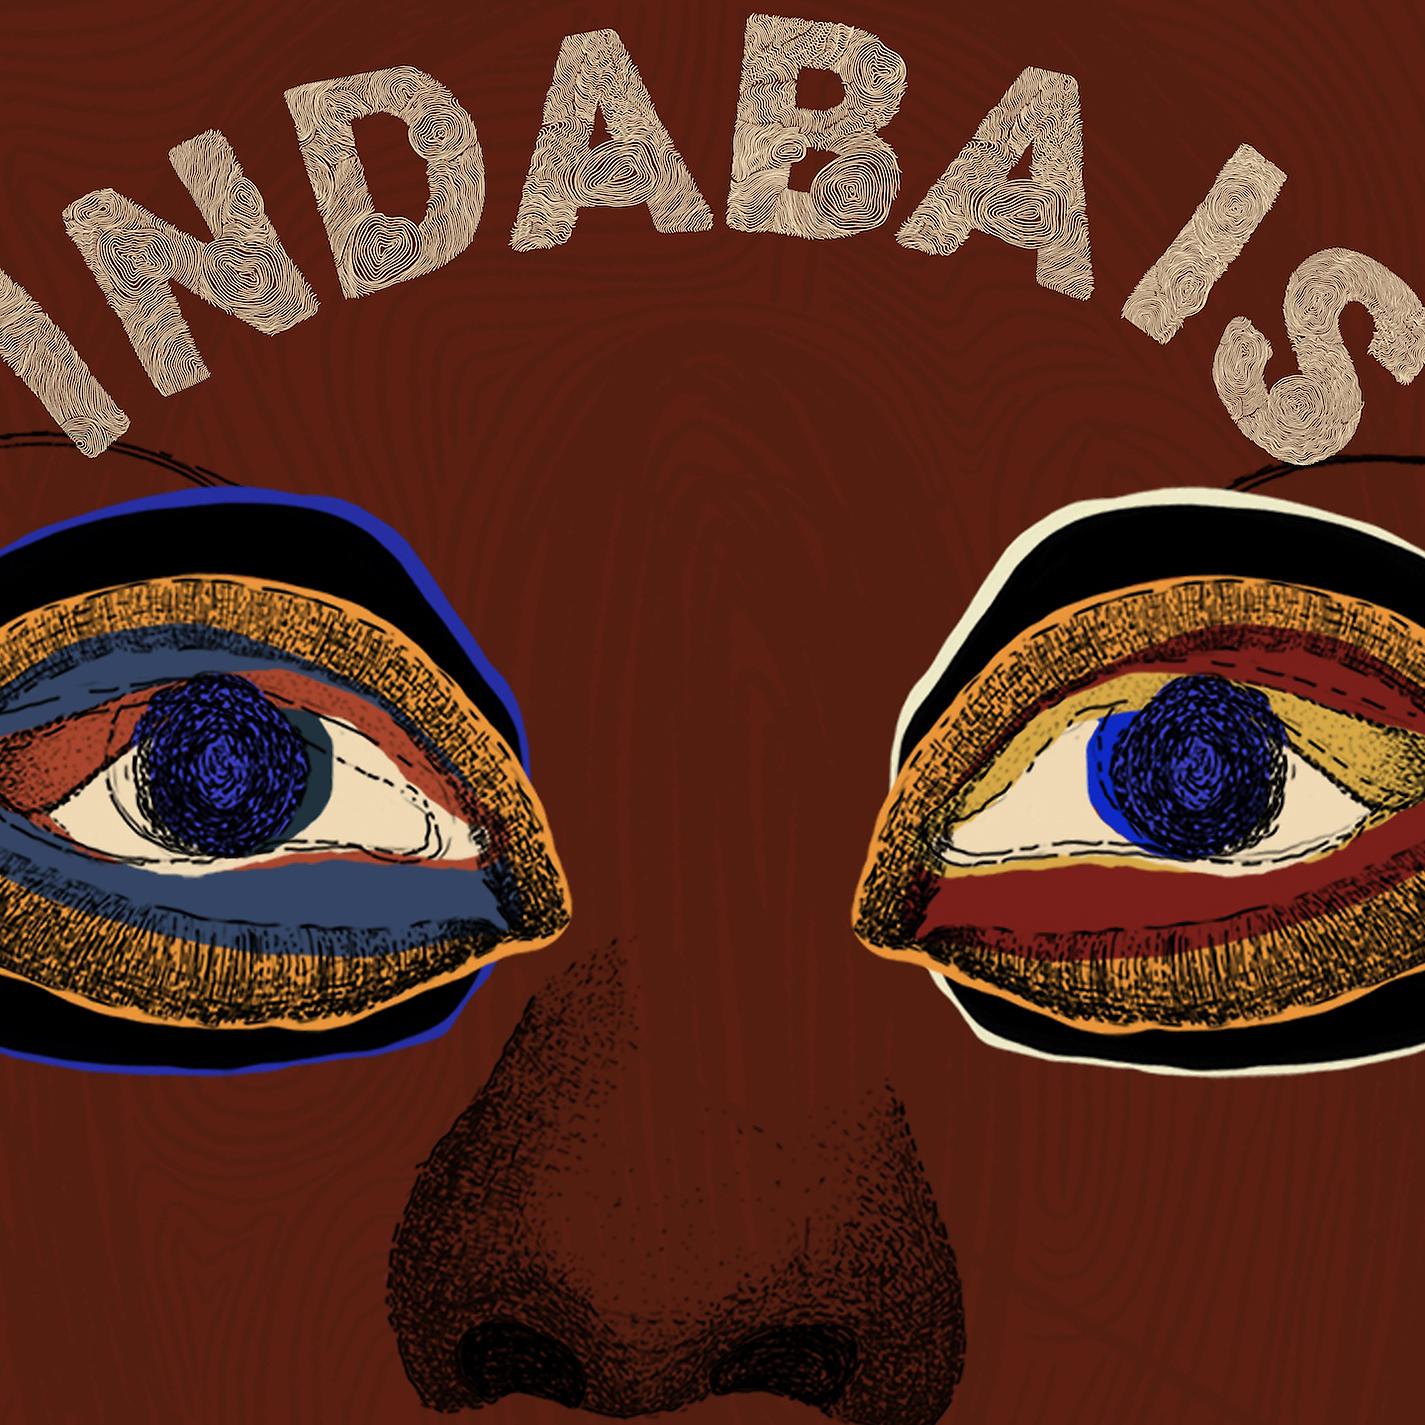 Постер альбома Umdali